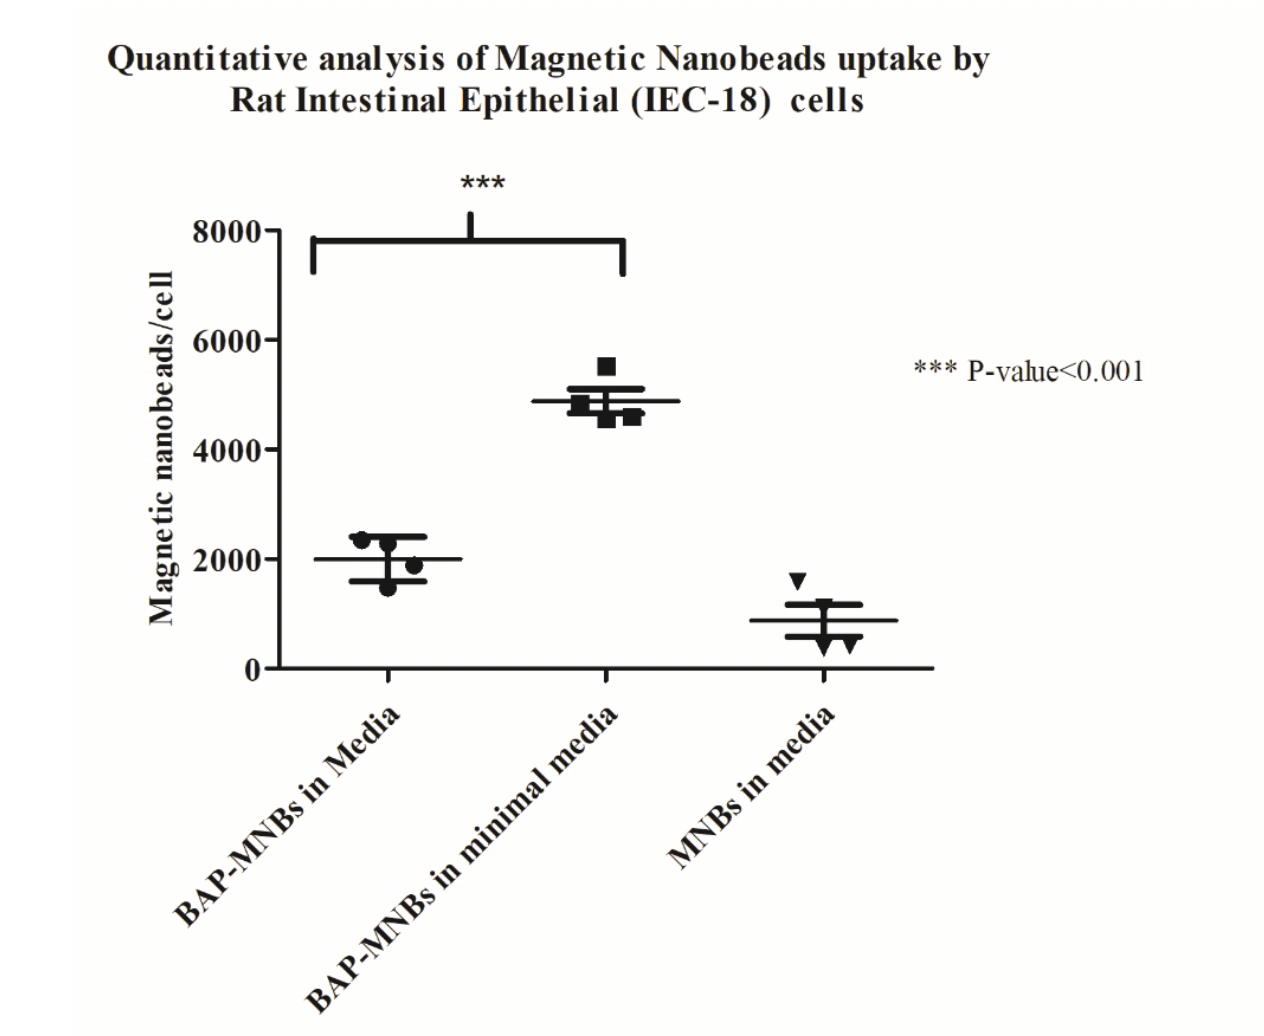 Quantitative analysis of Magnetic Nanobeads uptake by IEC-18 cells